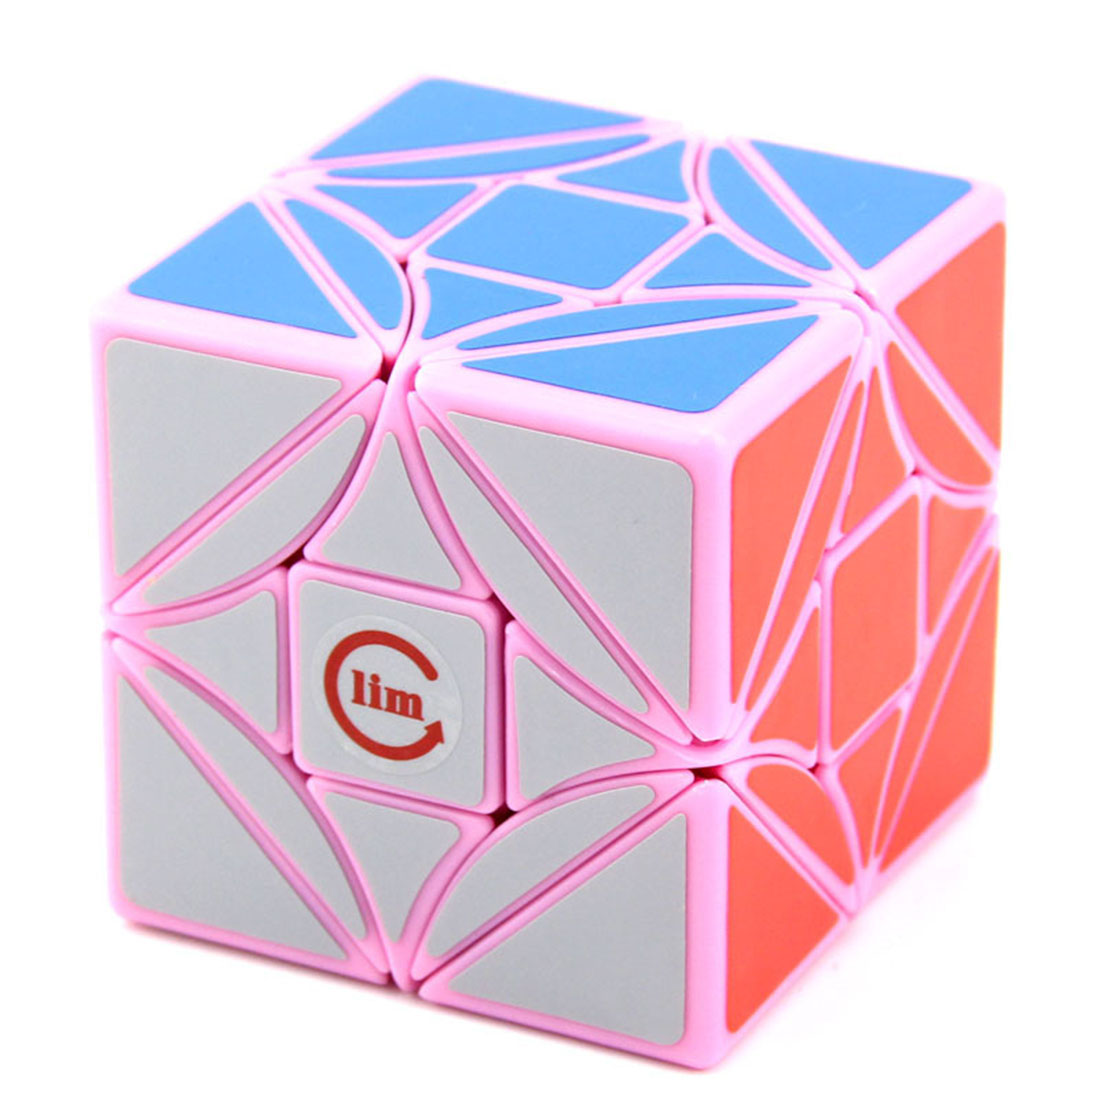 Funs LimCube 3x3 Dreidel Speed Cube (Pink)